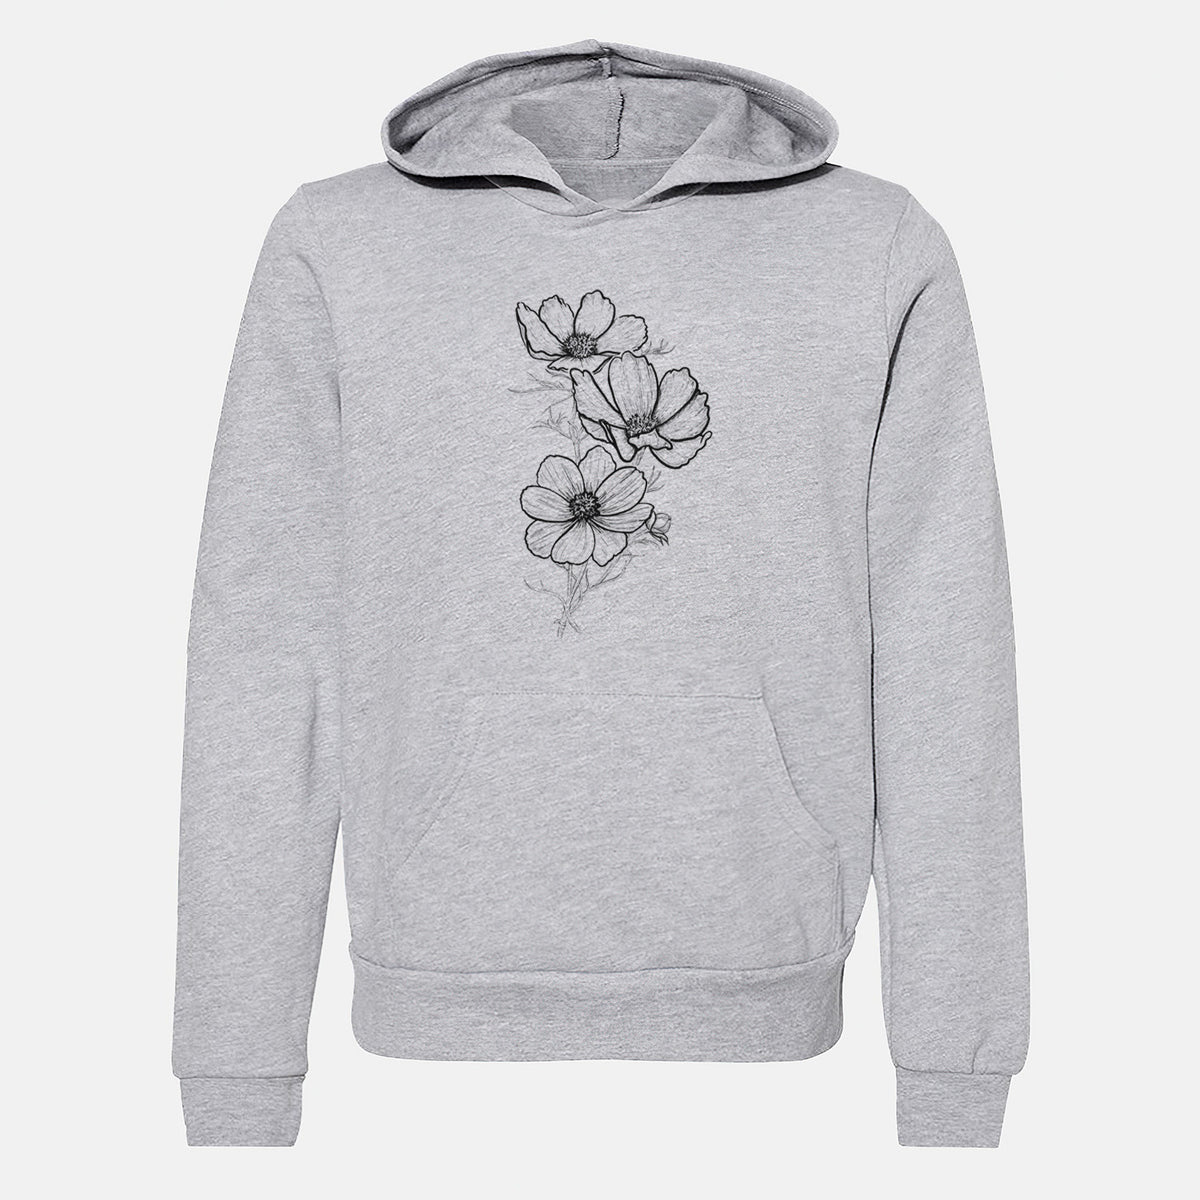 Garden Cosmos - Apollo White Cosmos bipinnatus - Youth Hoodie Sweatshirt